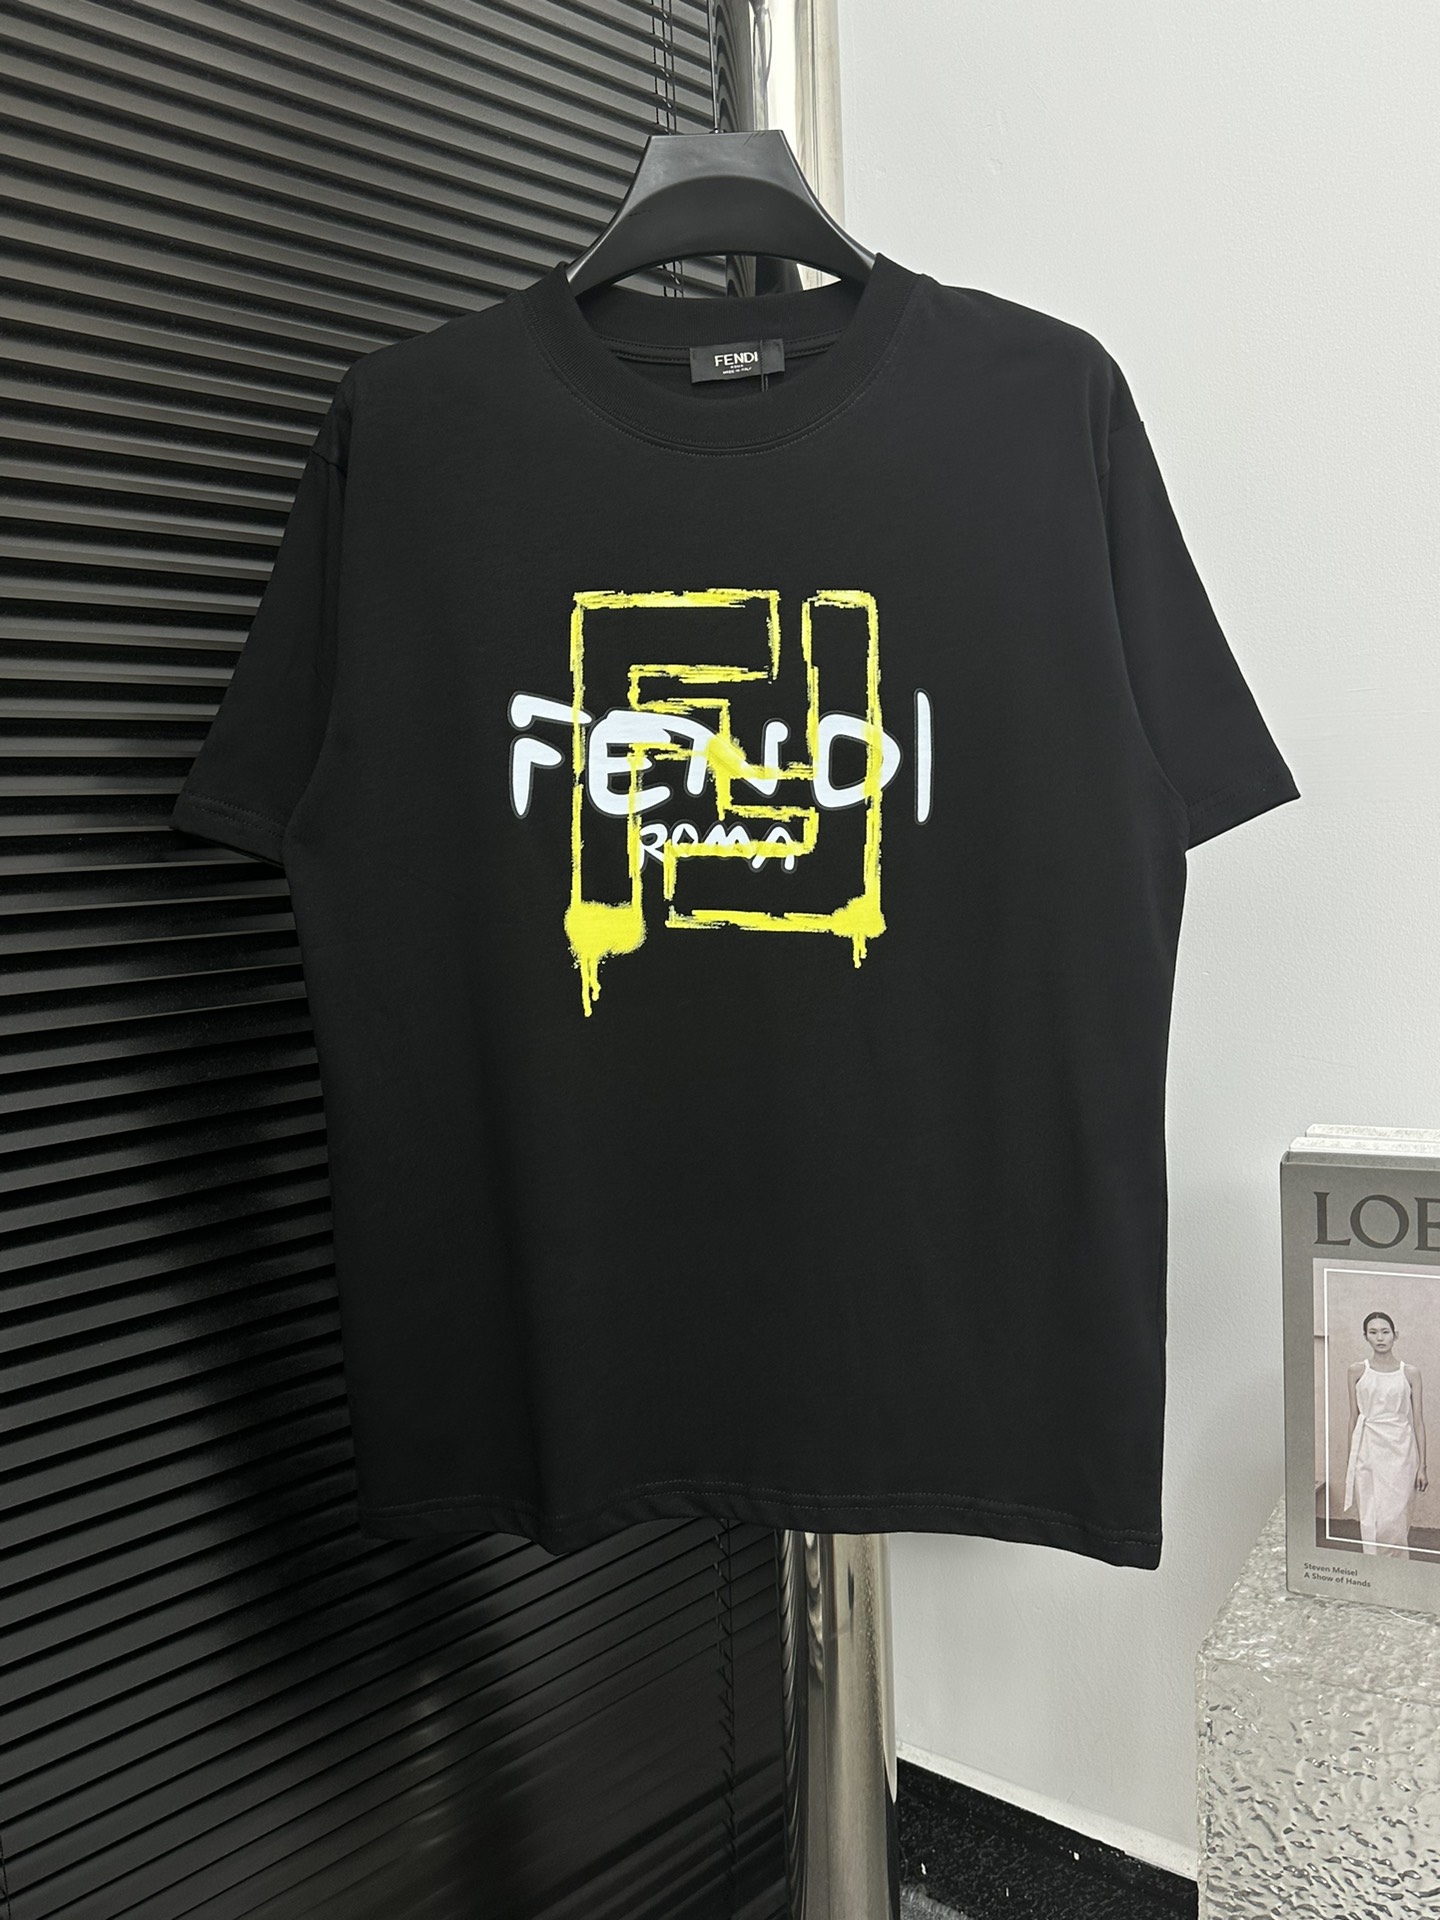 Fendi Clothing T-Shirt Black White Printing Cotton Short Sleeve